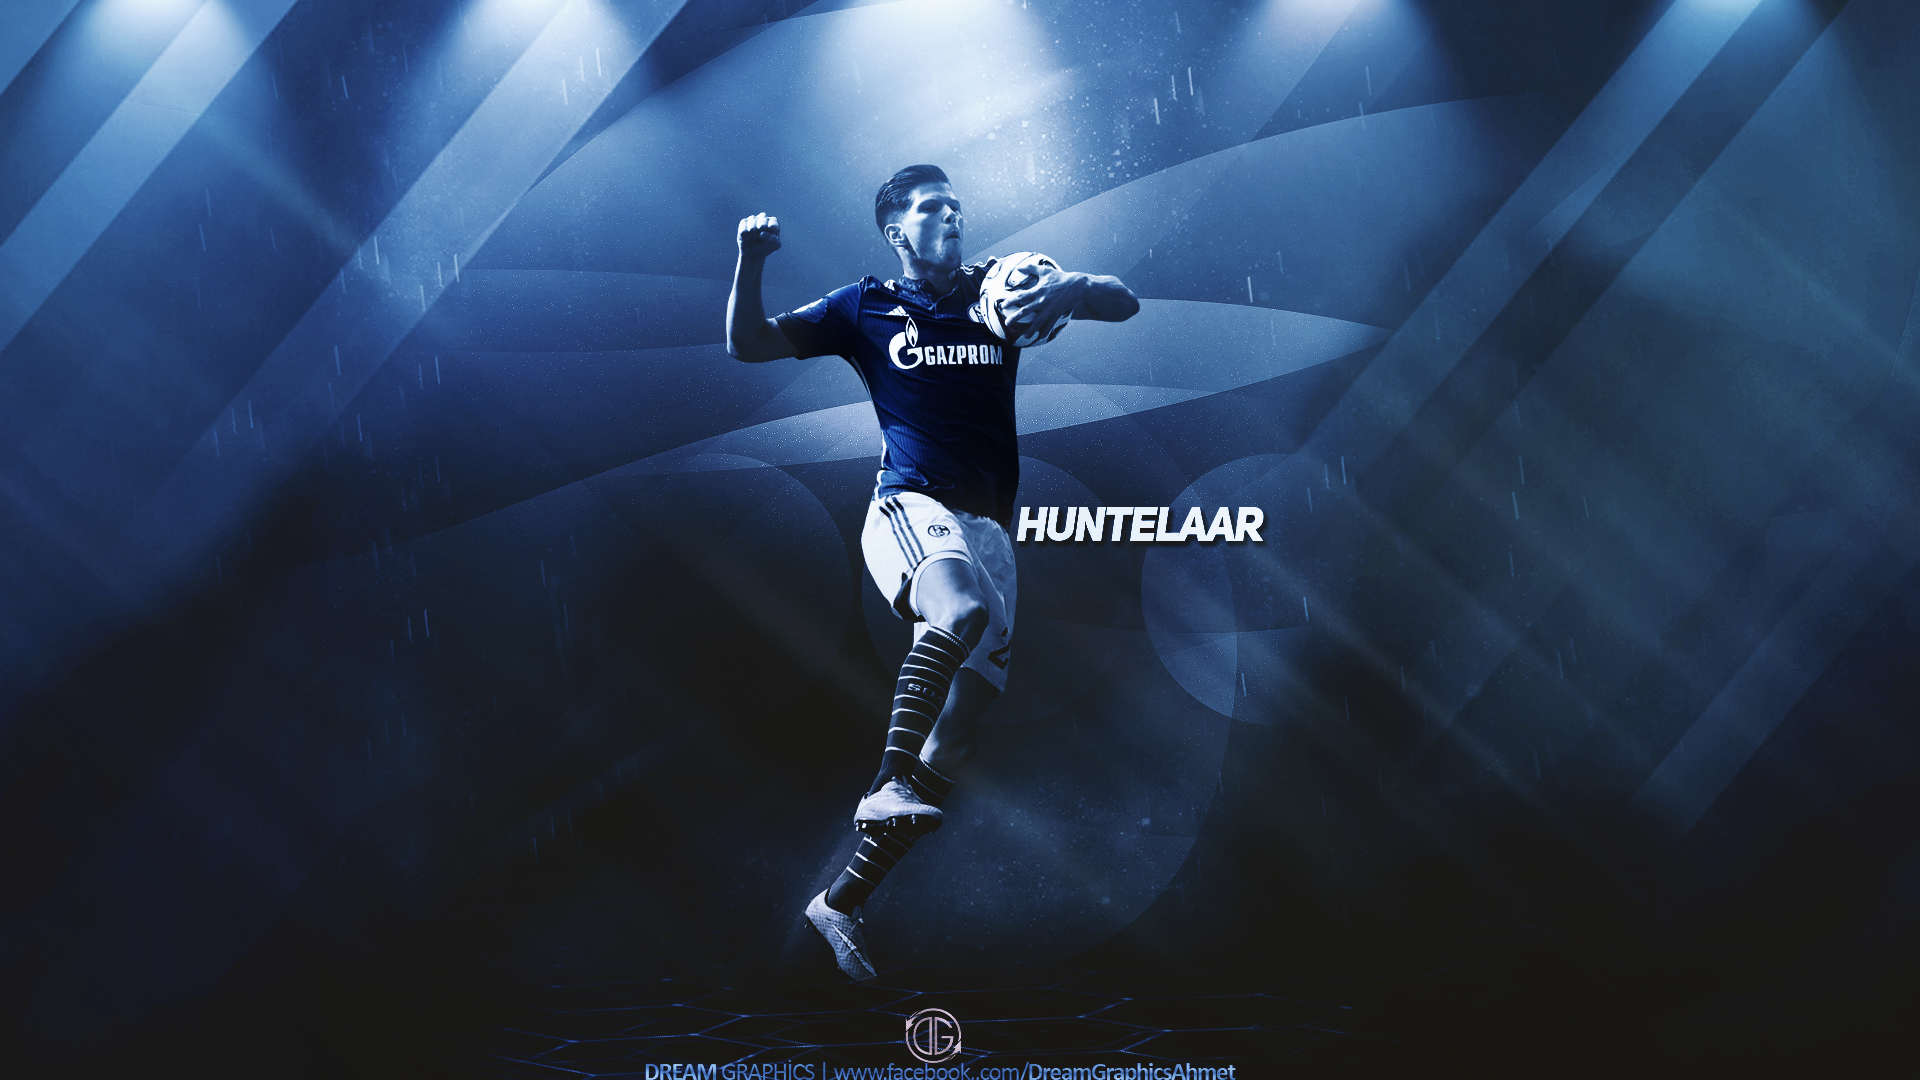 Sports Klaas-Jan Huntelaar HD Wallpaper | Background Image